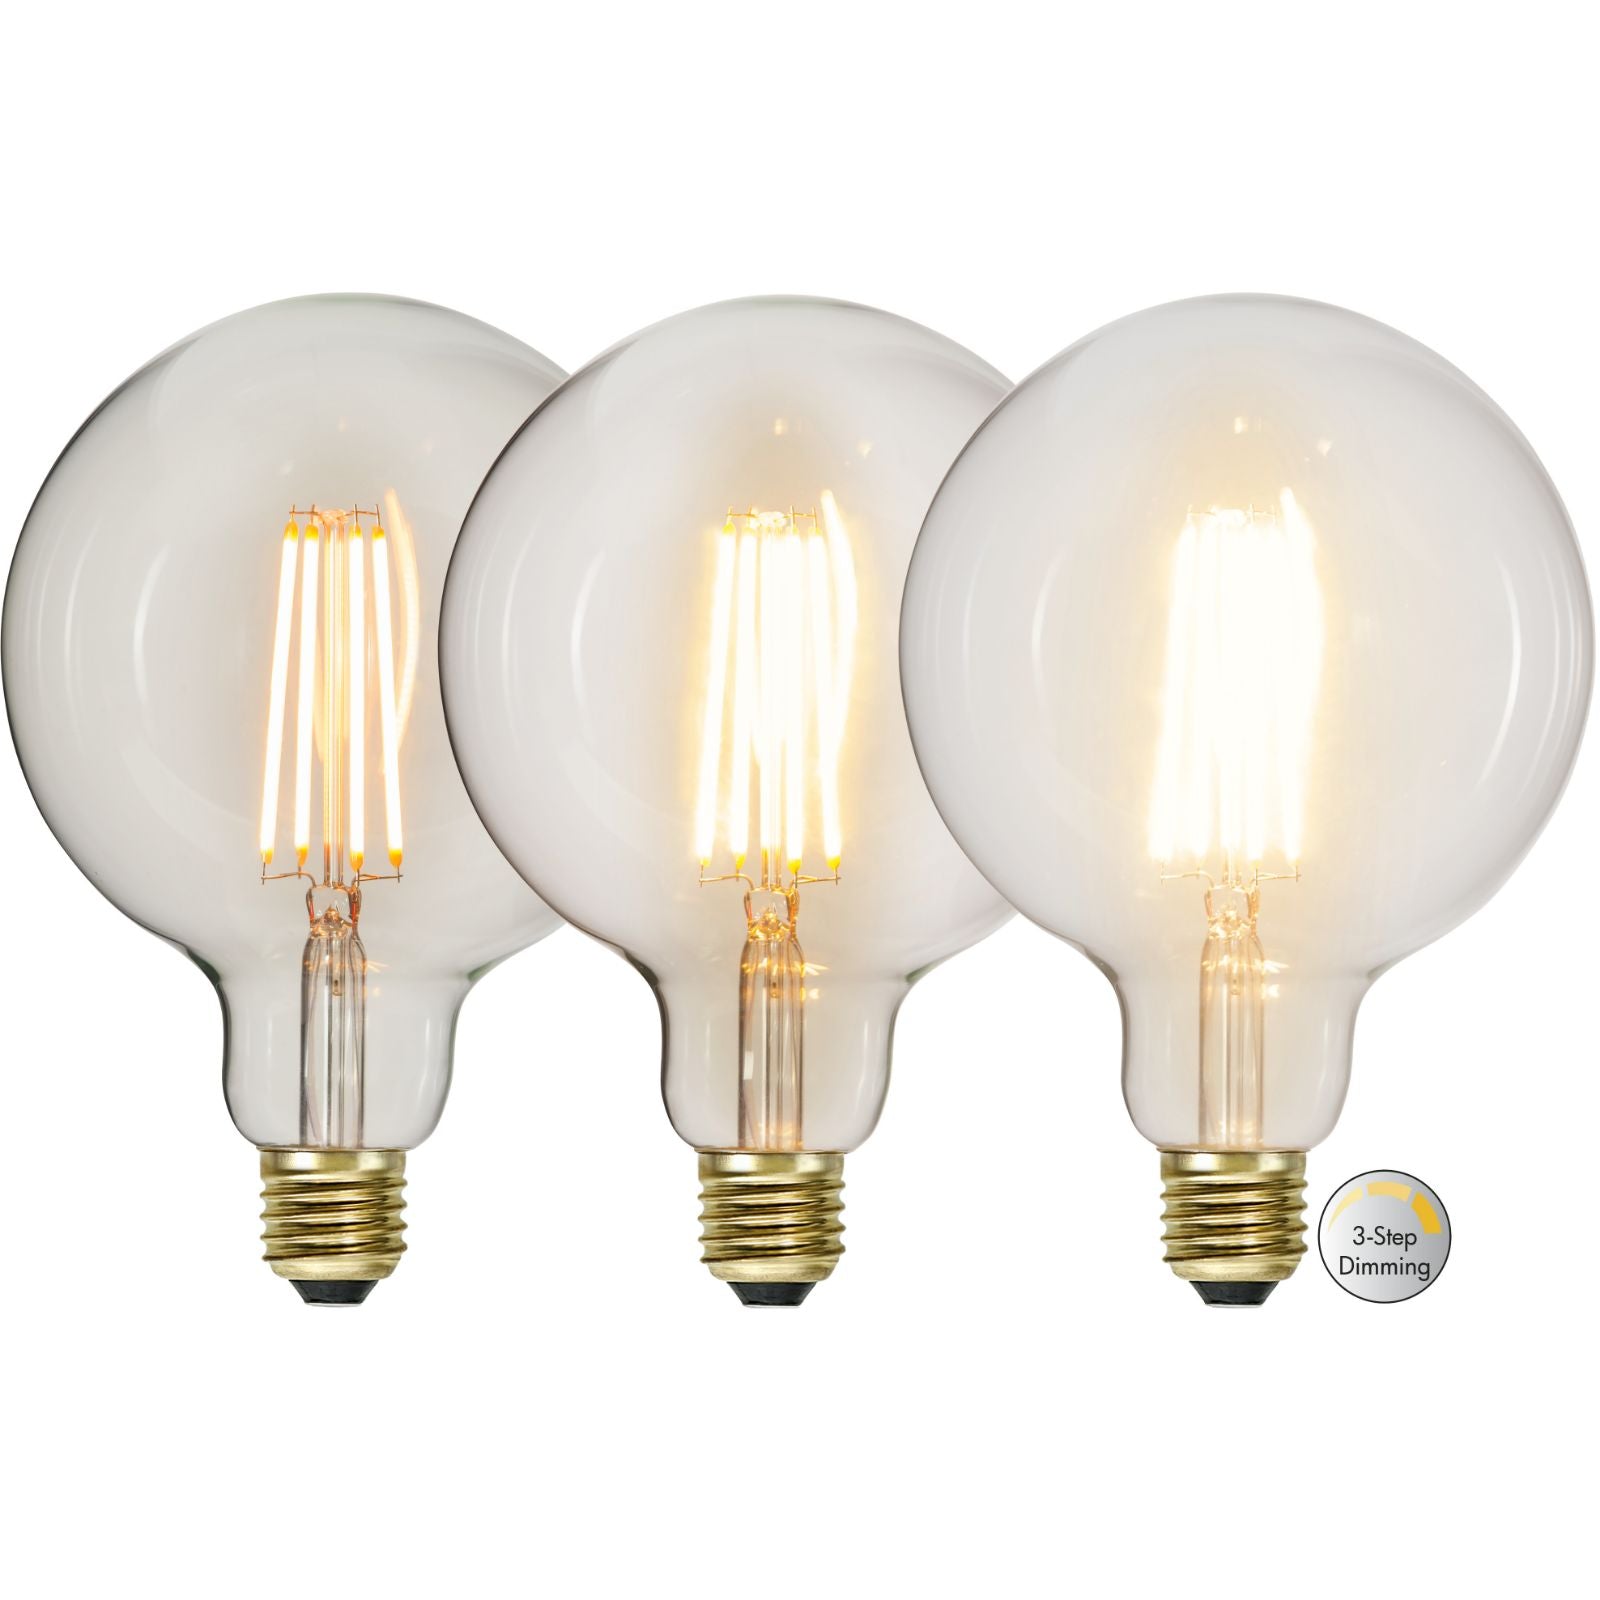 Star Trading - LED-lampa E27 G125 Soft Glow 3-step - 6.5w - 2100K - 3-Step-Dim